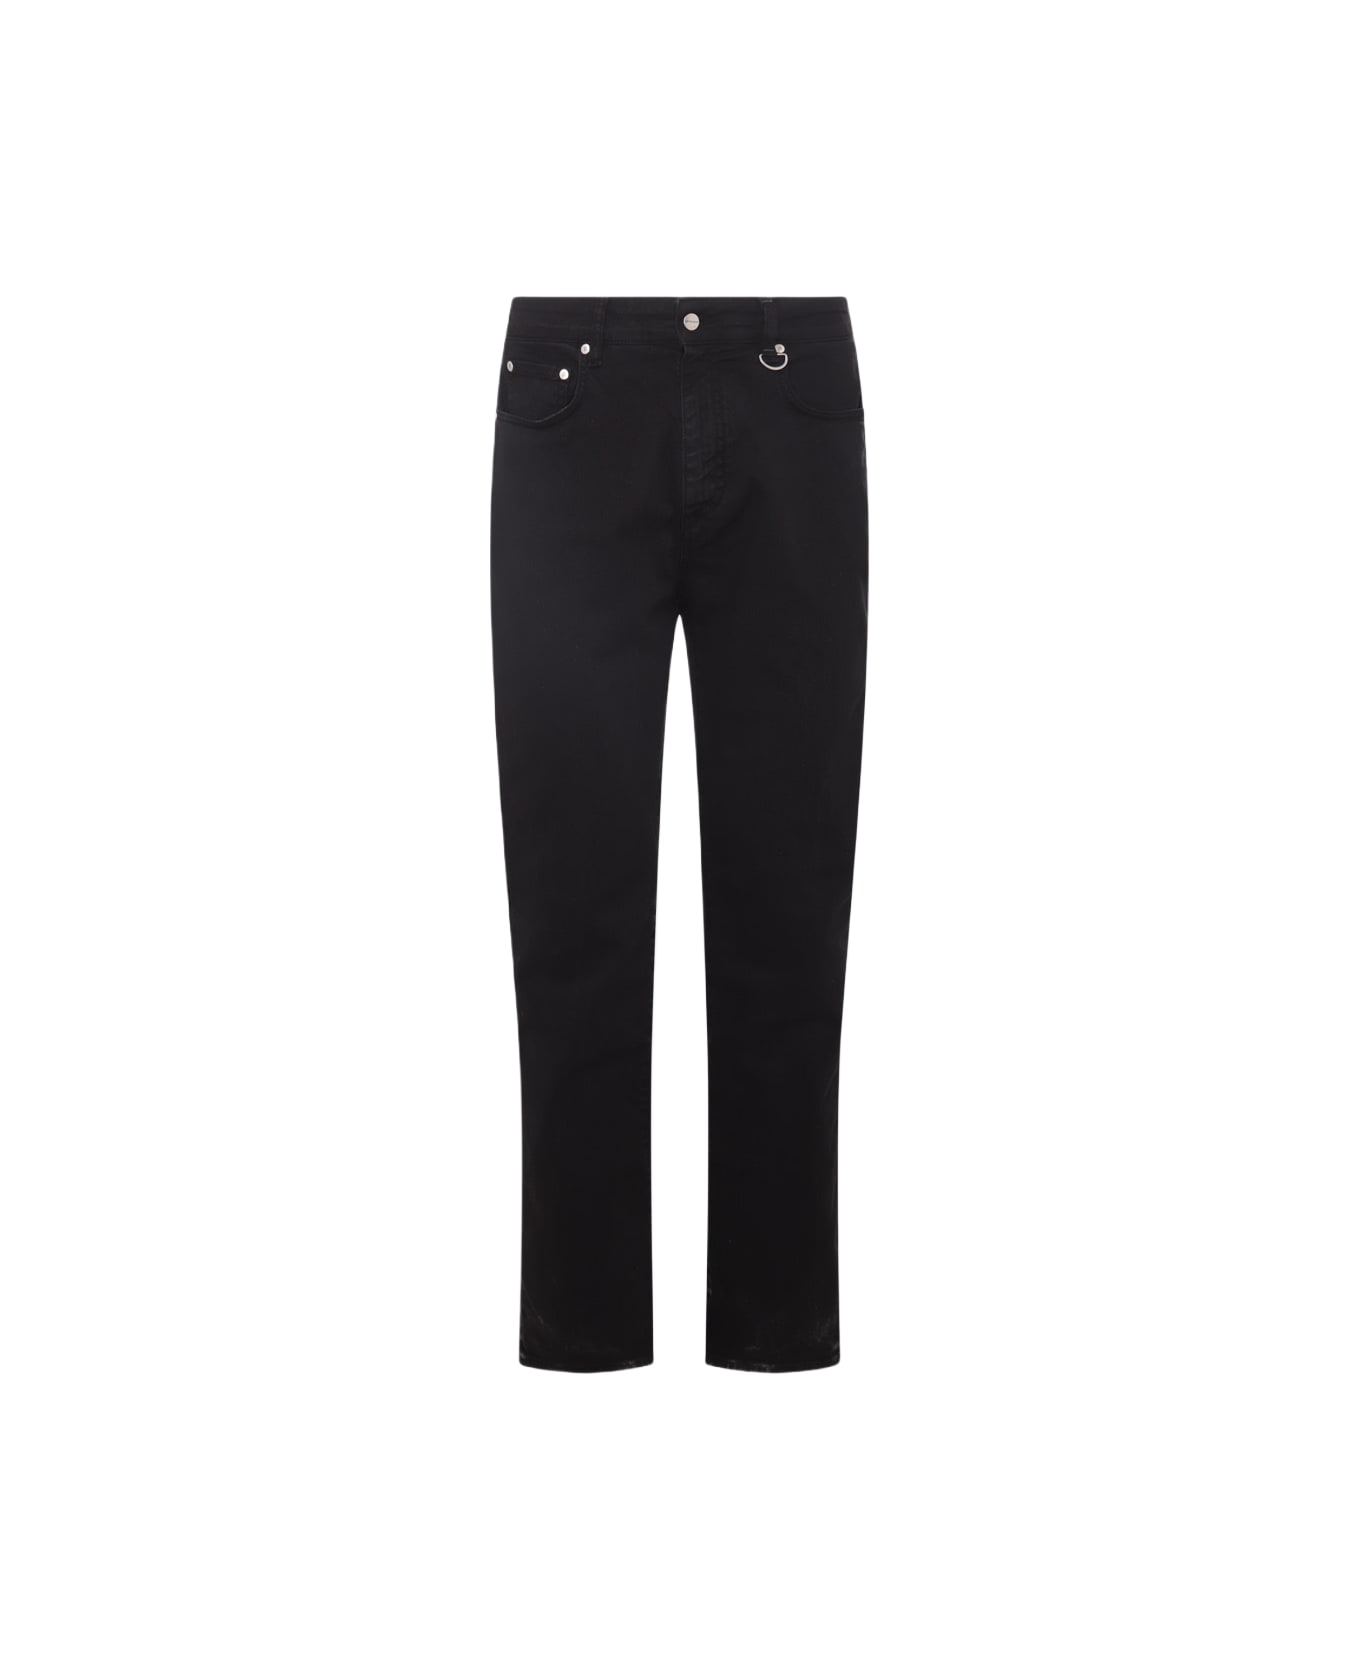 REPRESENT Black Cotton Blend Jeans - Black デニム